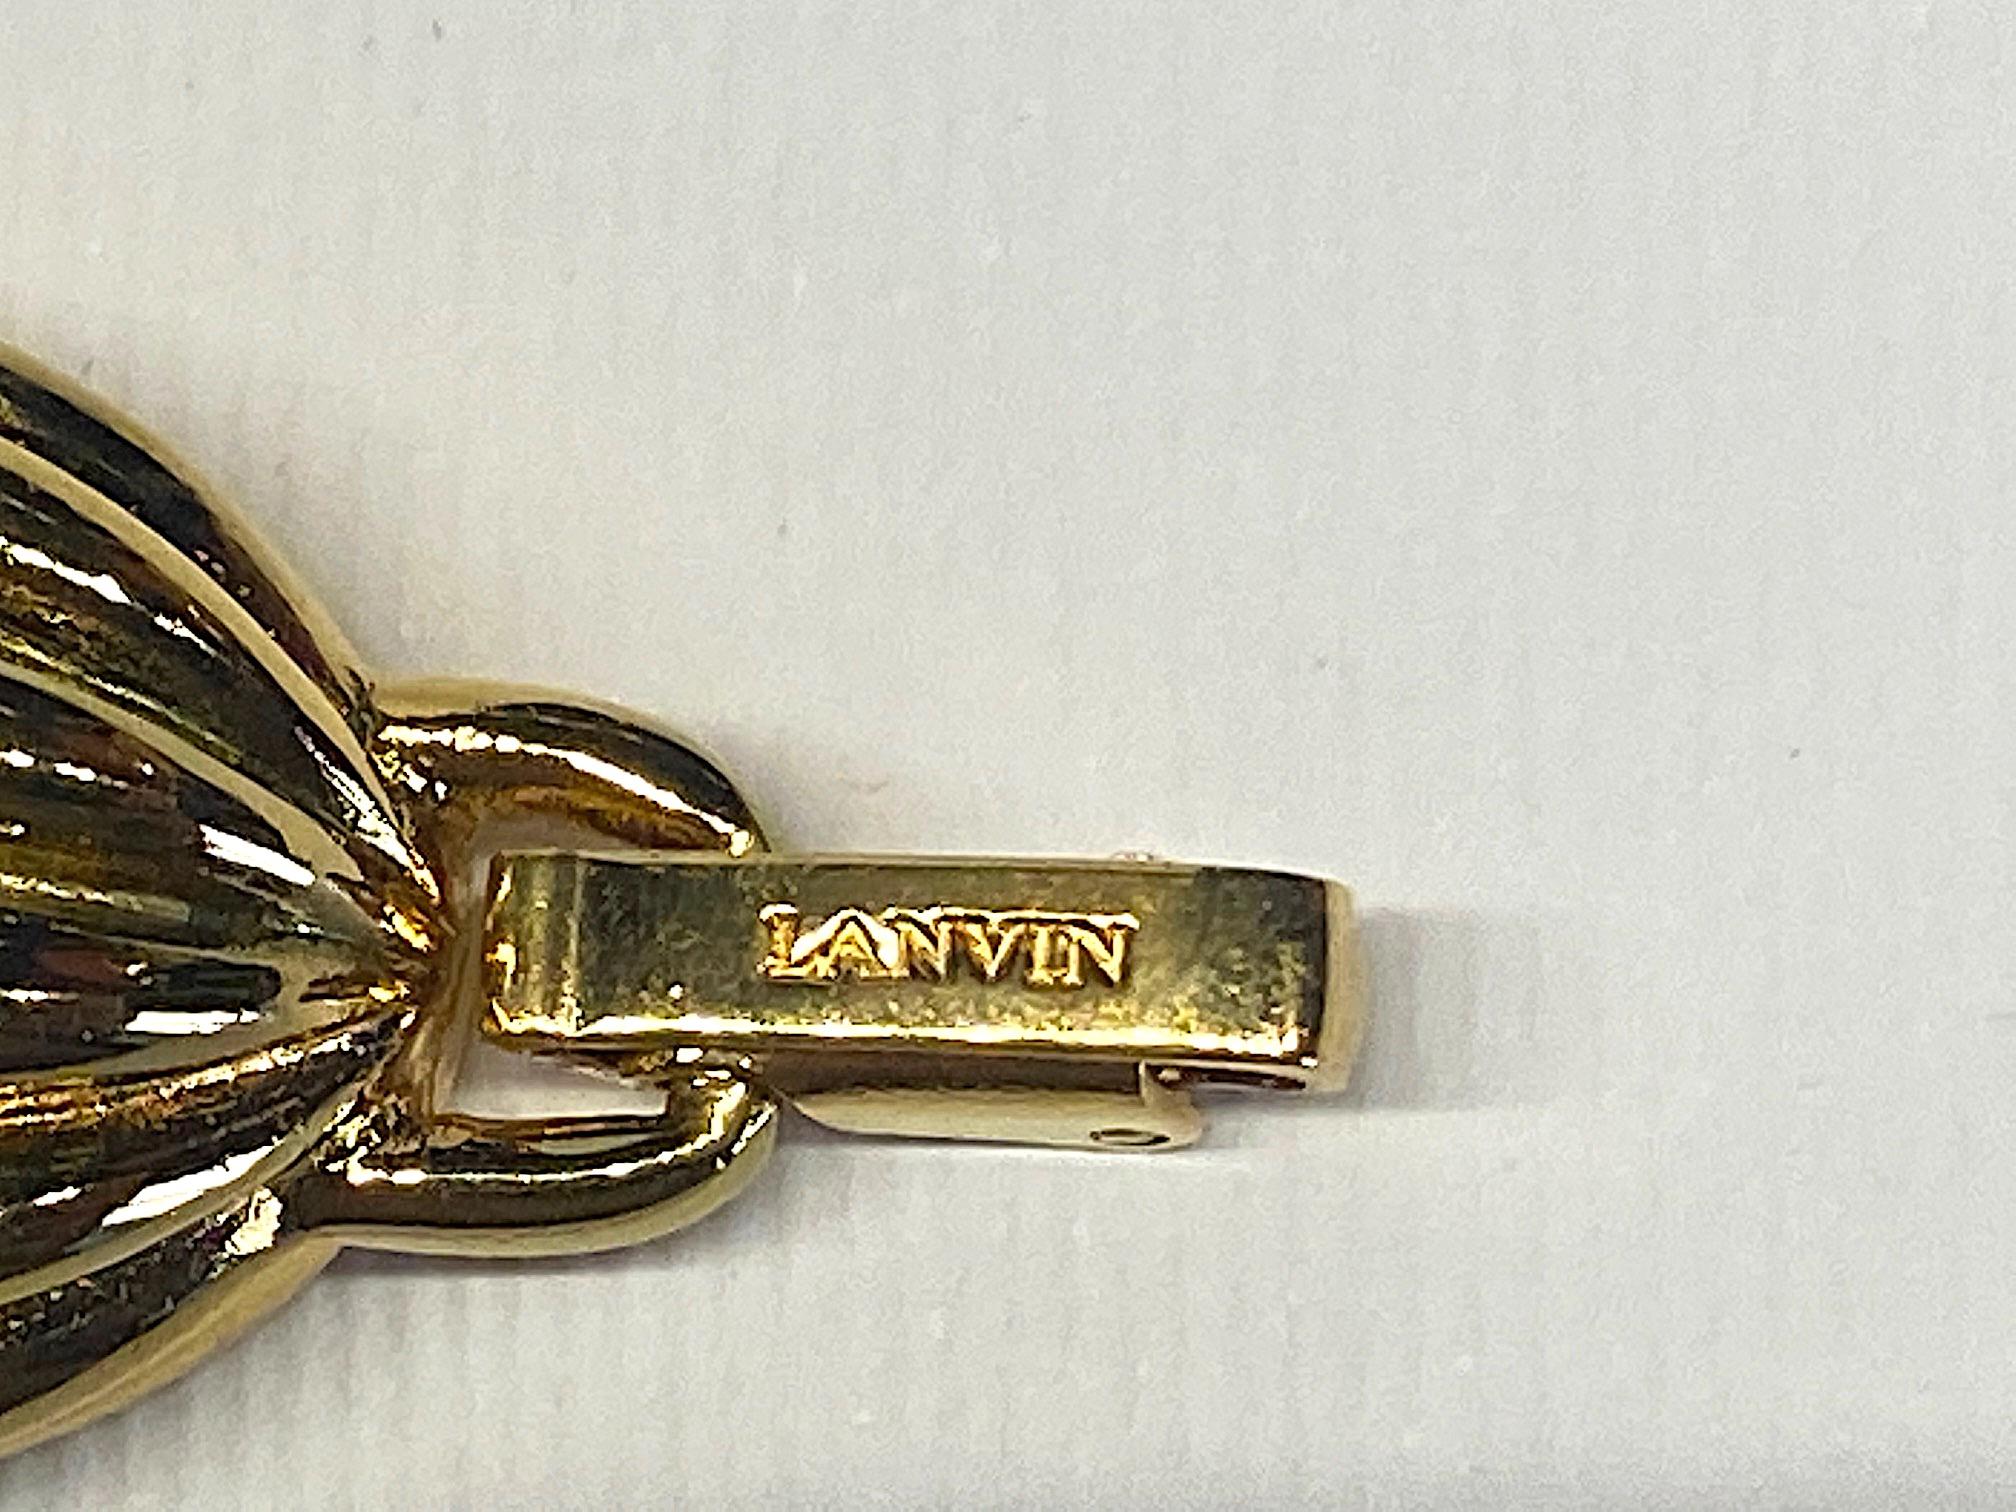 Lanvin Gold Dome Oval Link 1980s Bracelet by Henkel & Grosse' 8